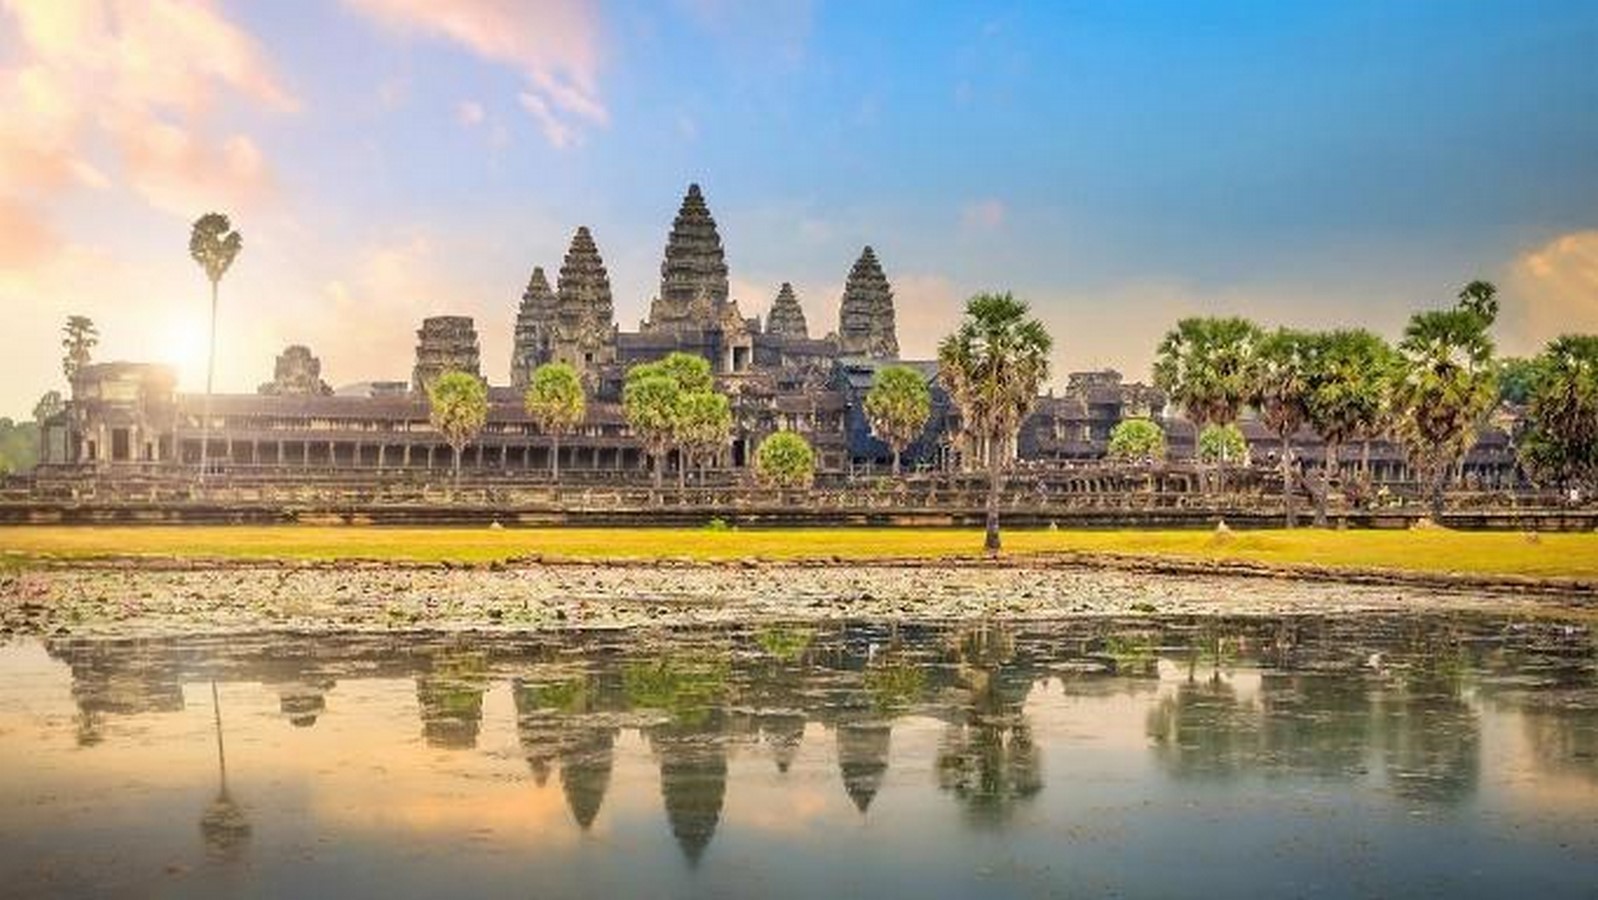 Historic centre of Angkor, Cambodia - Sheet1